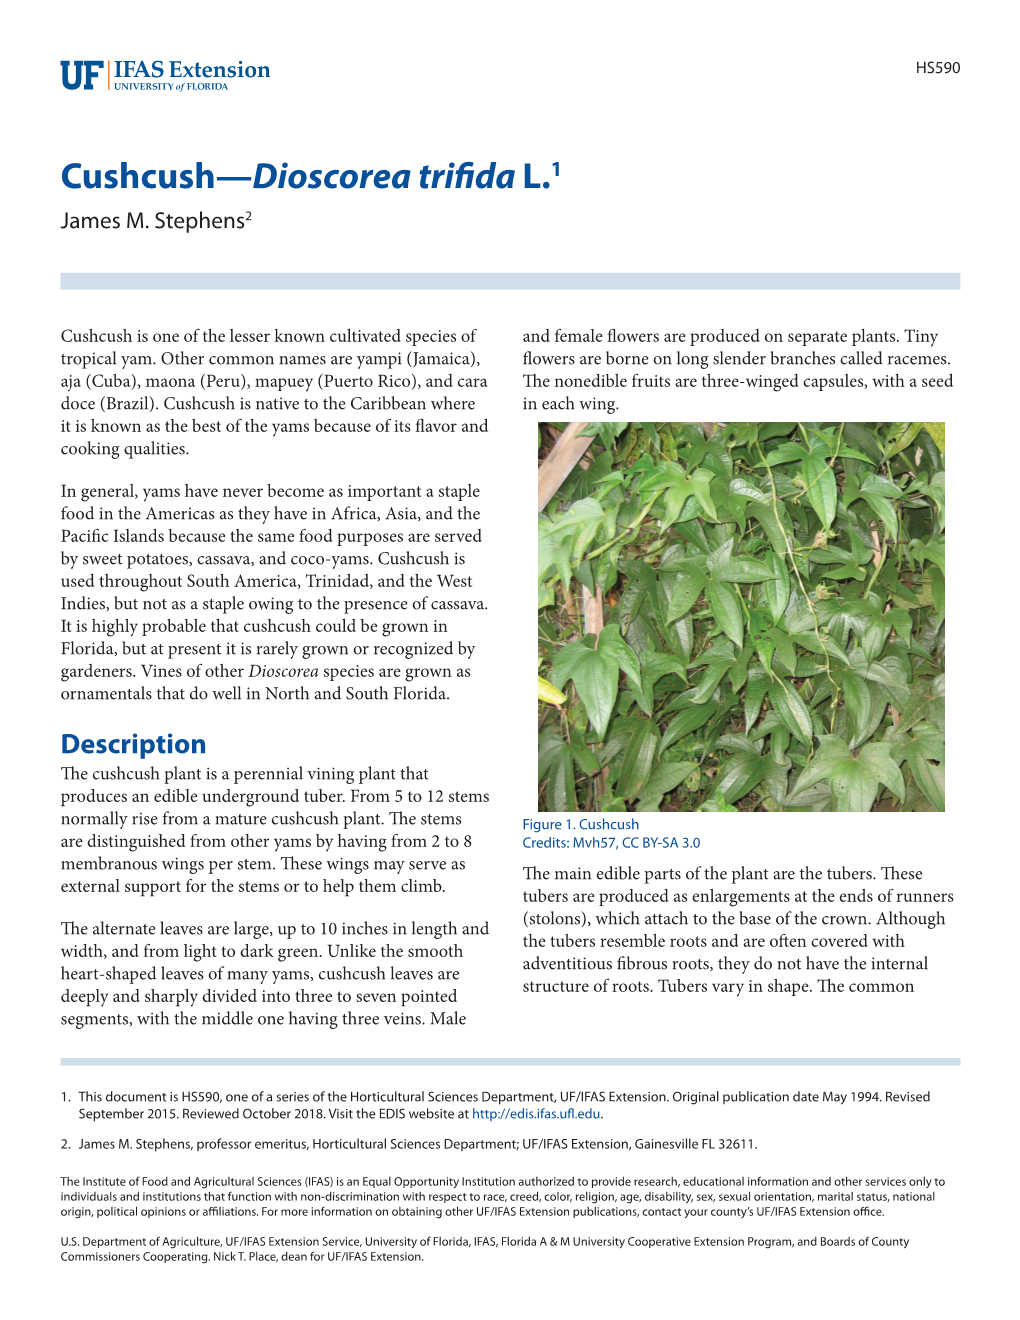 Cushcush—Dioscorea Trifidal